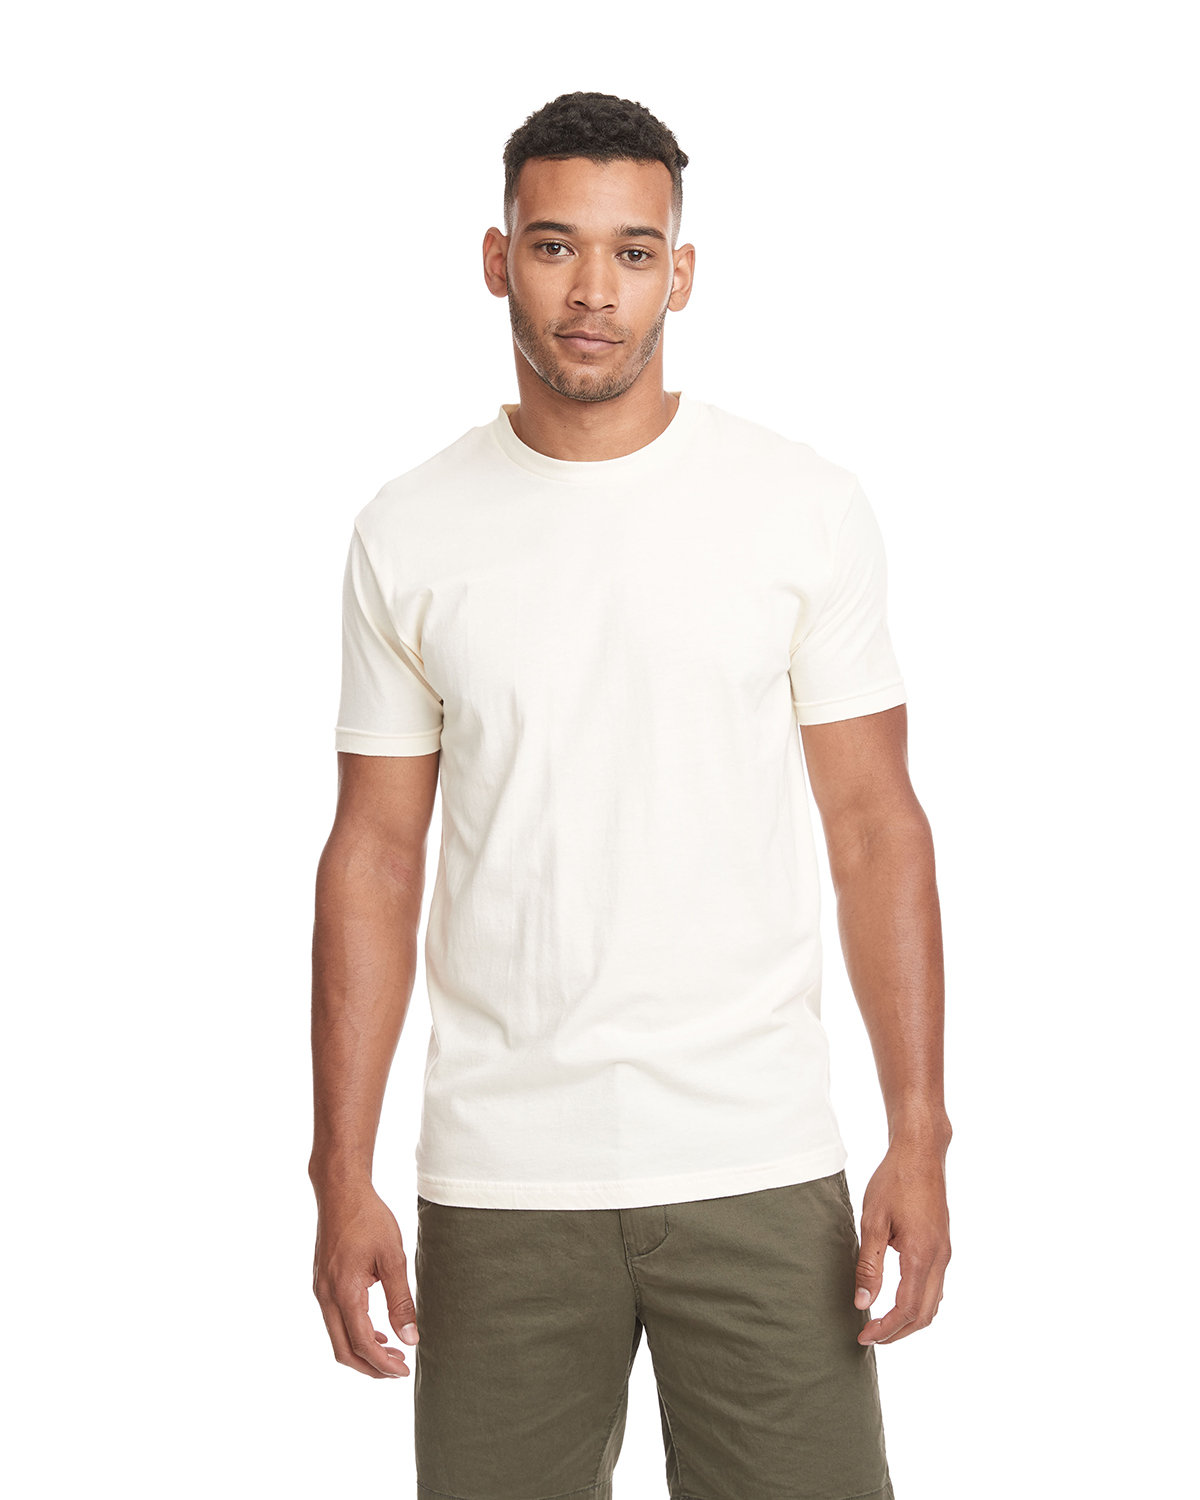 Next Level Apparel 3600 Premium Cotton T-SHIRT - 4.3 oz Super Soft Blank  Shirts 